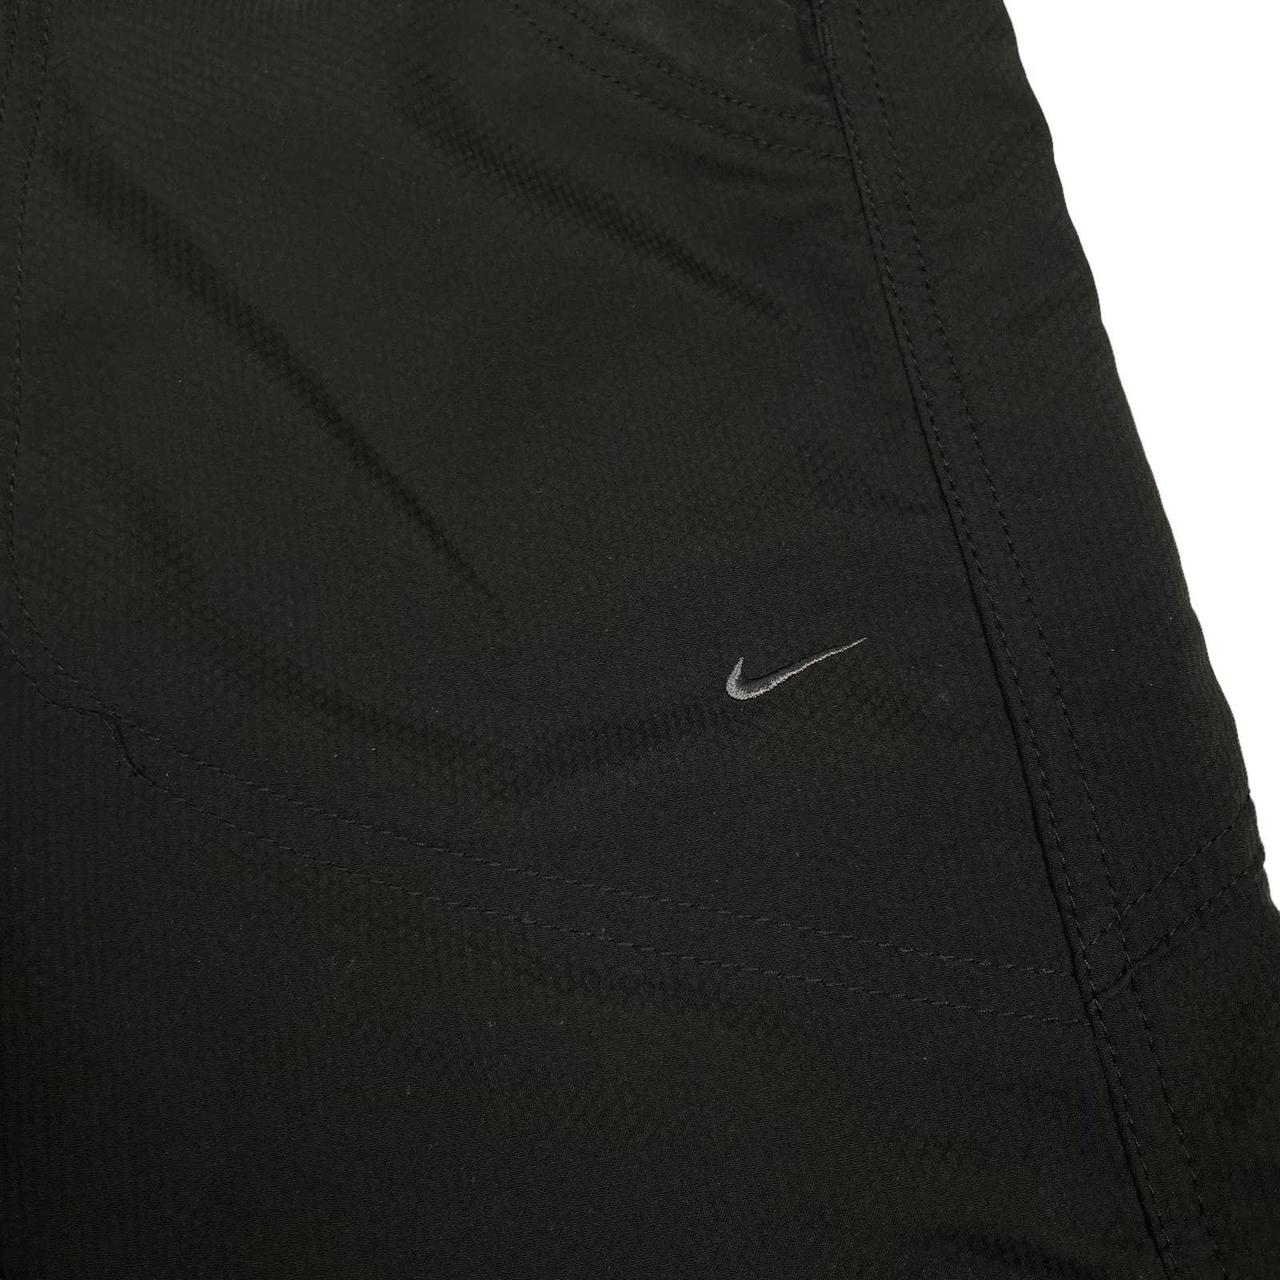 Nike Dri Fit Running Pants Capris Joggers Women XL - Depop